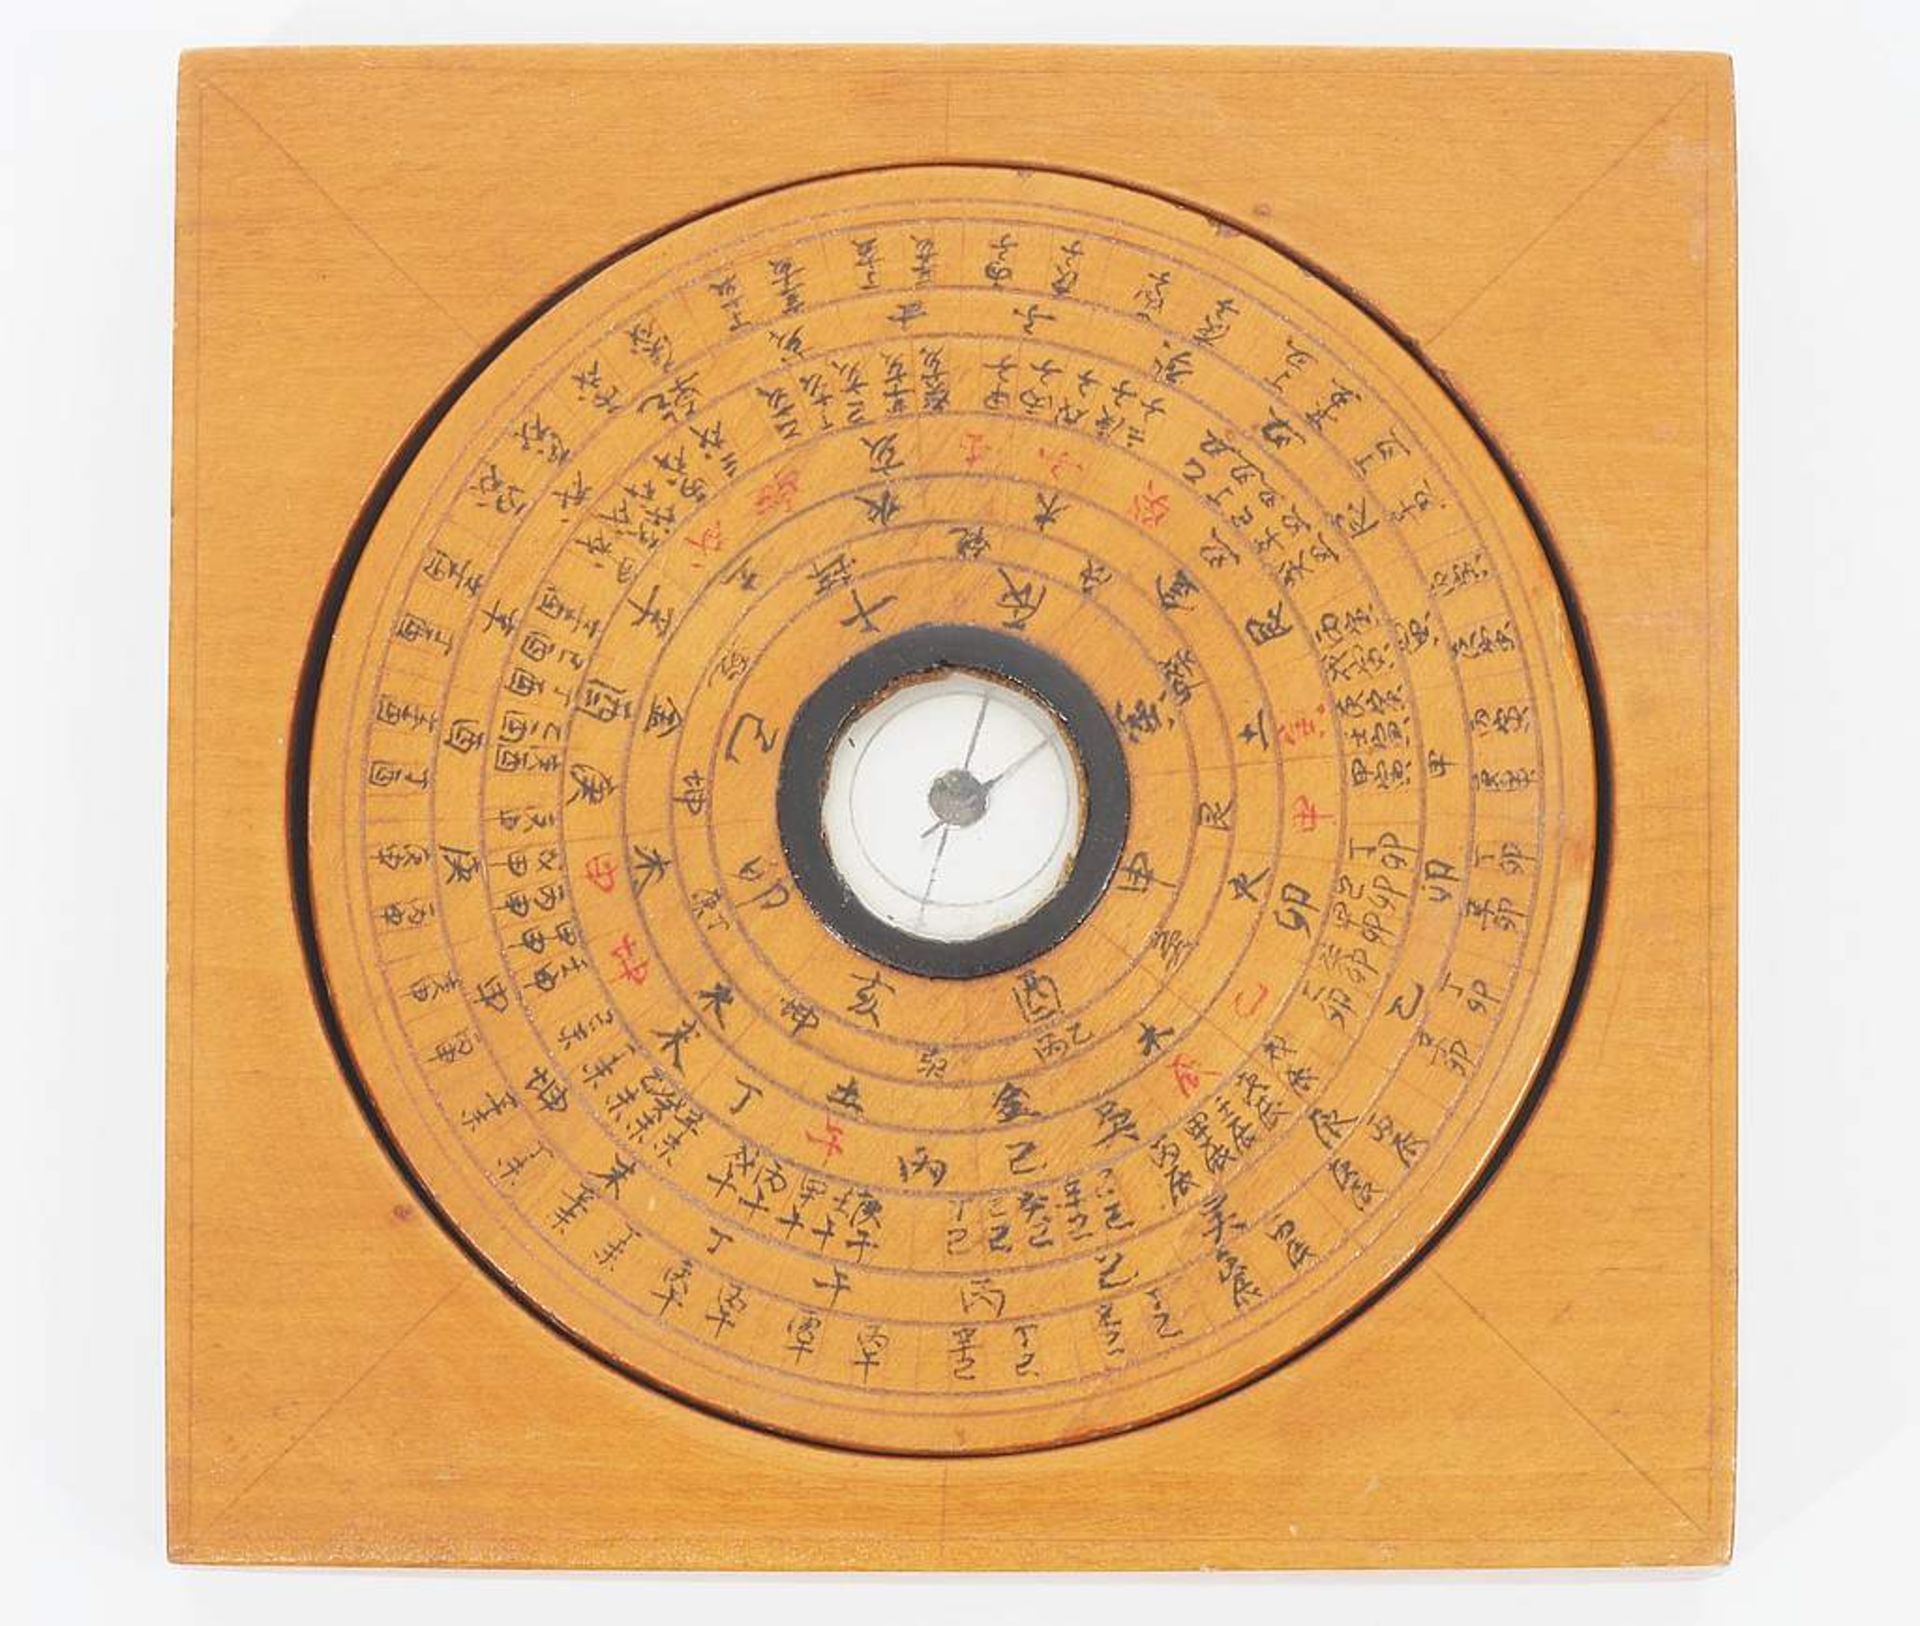 Feng Shui Kompass, China, wohl 19. Jahrhundert. Holzrahmen mit beweglichem Innenkreis, Höhe 2 cm - Image 2 of 5